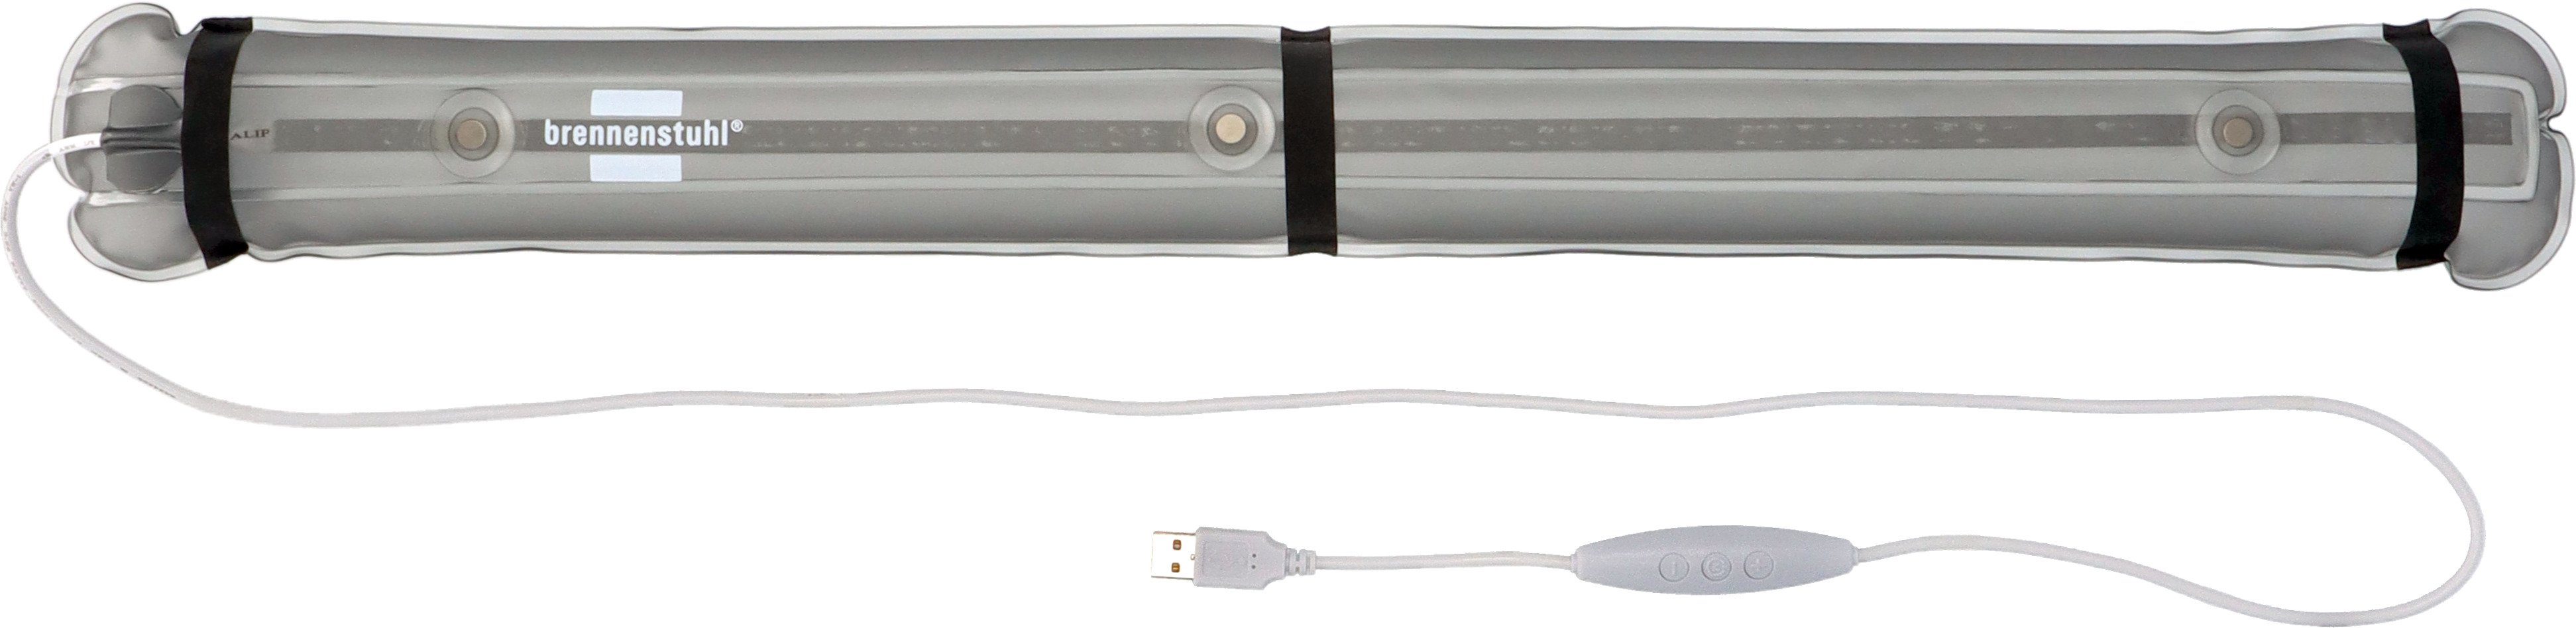 Brennenstuhl LED 1m Gartenleuchte stufenlos integriert, USB OLI dimmbar, fest faltbare Air 1, mit aufblasbar, Kabel Röhre LED LED